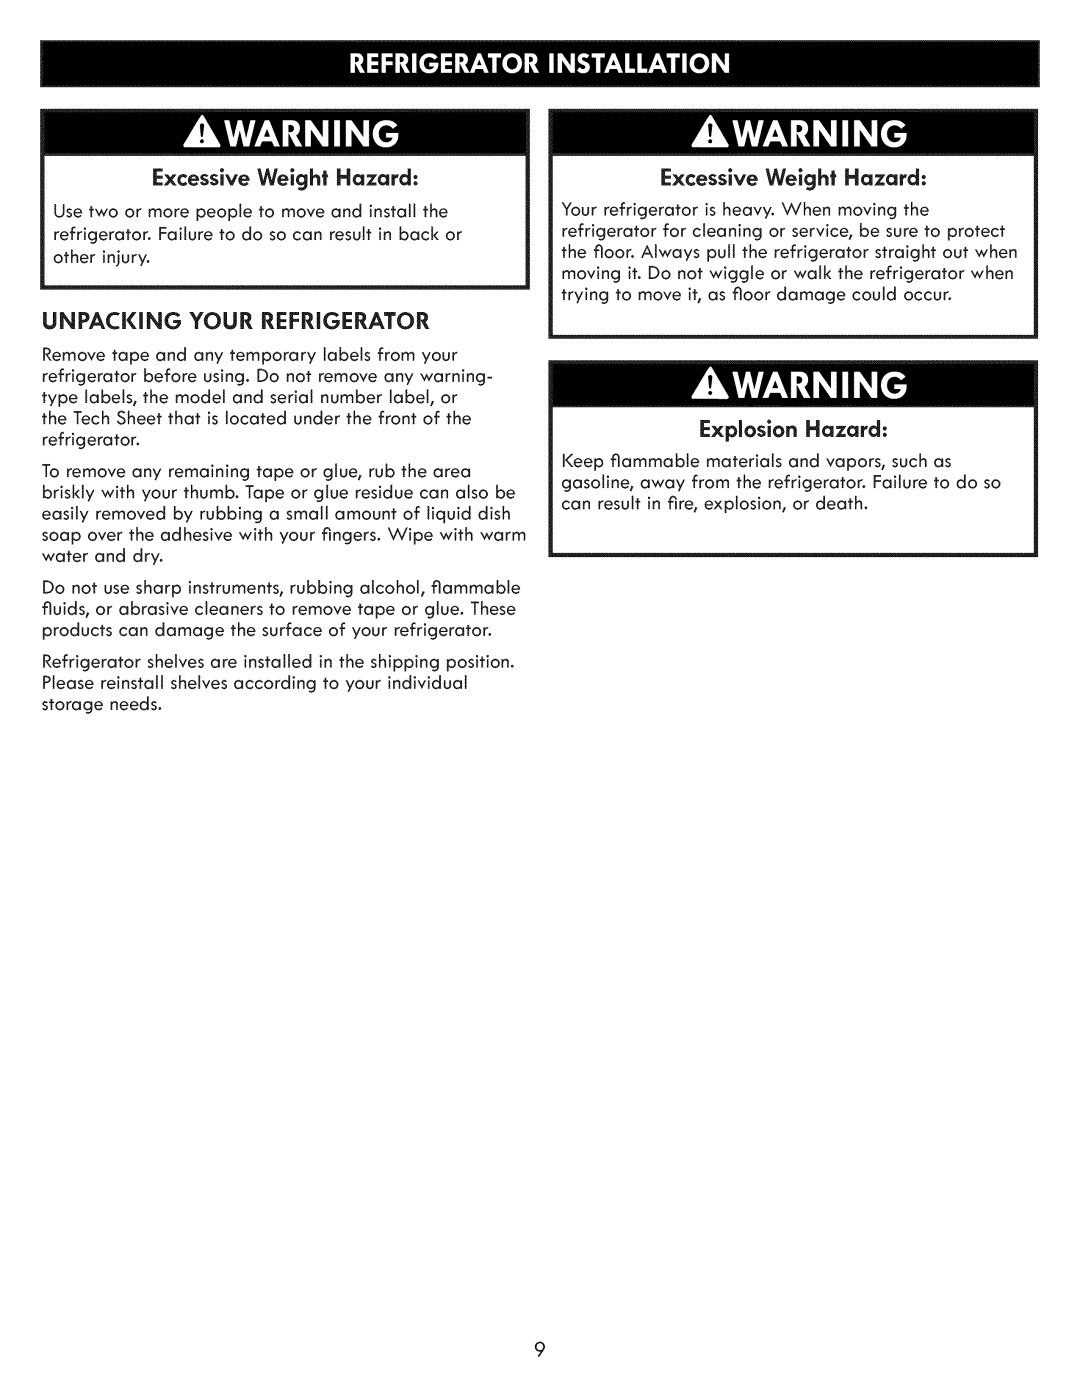 Kenmore 795.7205 manual Excessive Weight Hazard, Unpacking Your Refrigerator, Explosion Hazard 